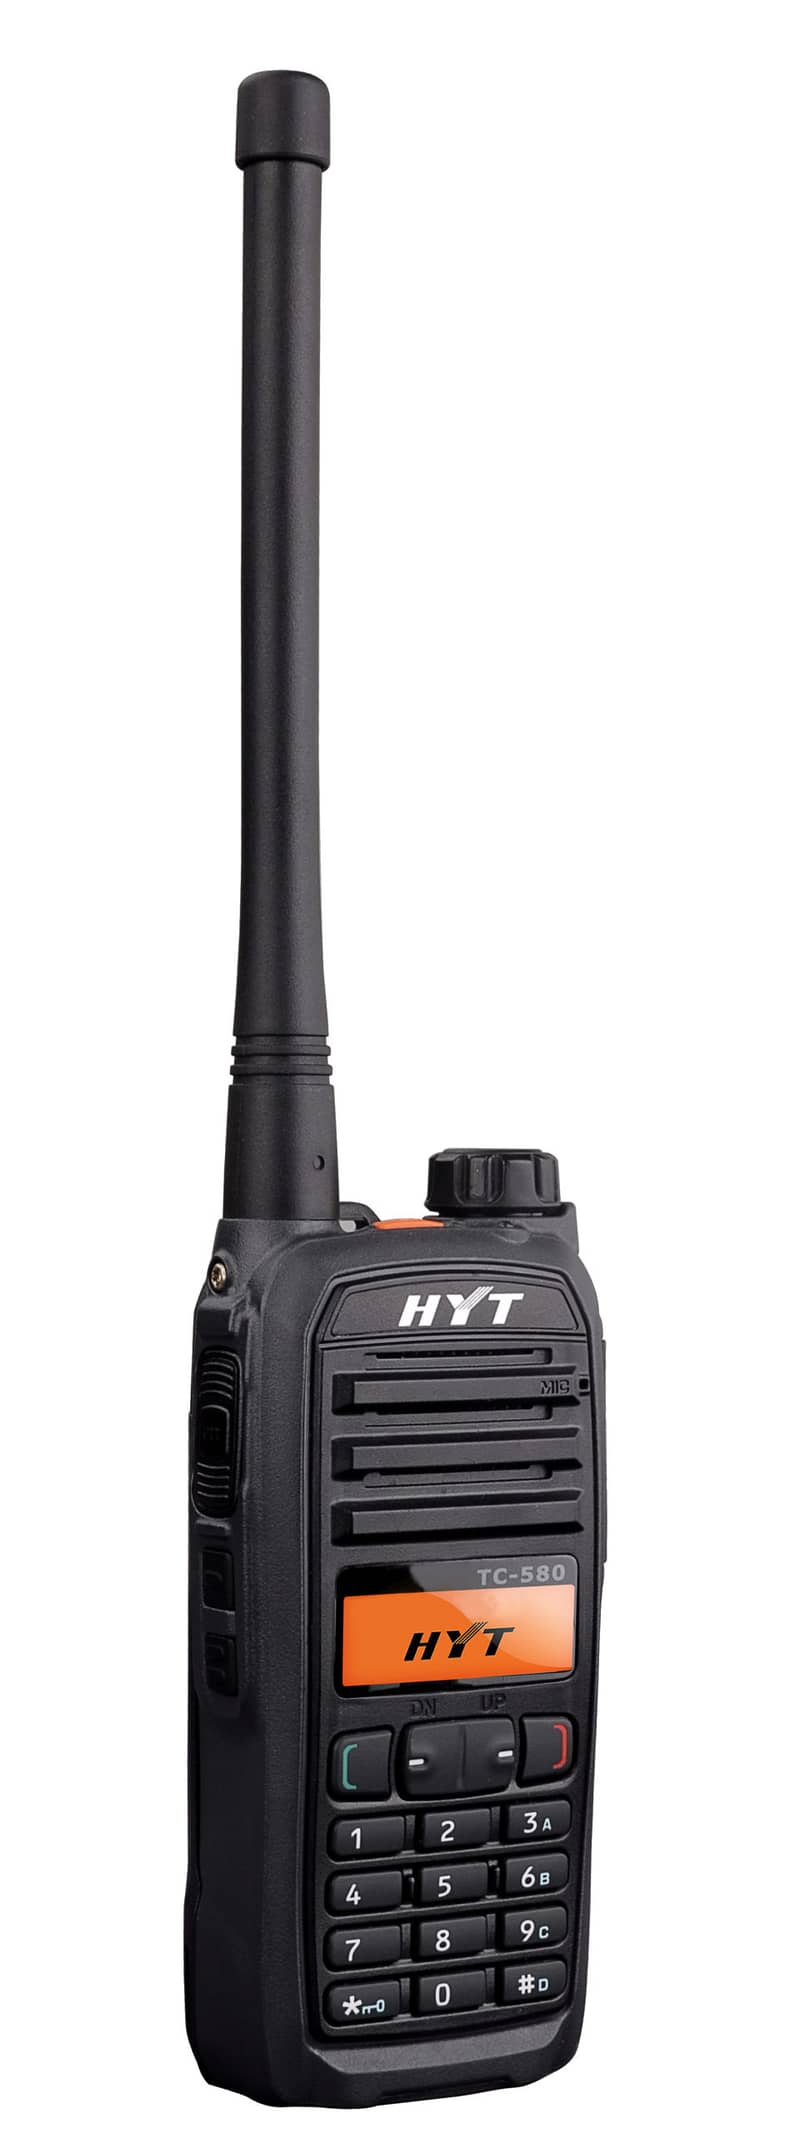 HYT Hytera_TC580 Professional Two way radio walkie talkie VHF Support 4